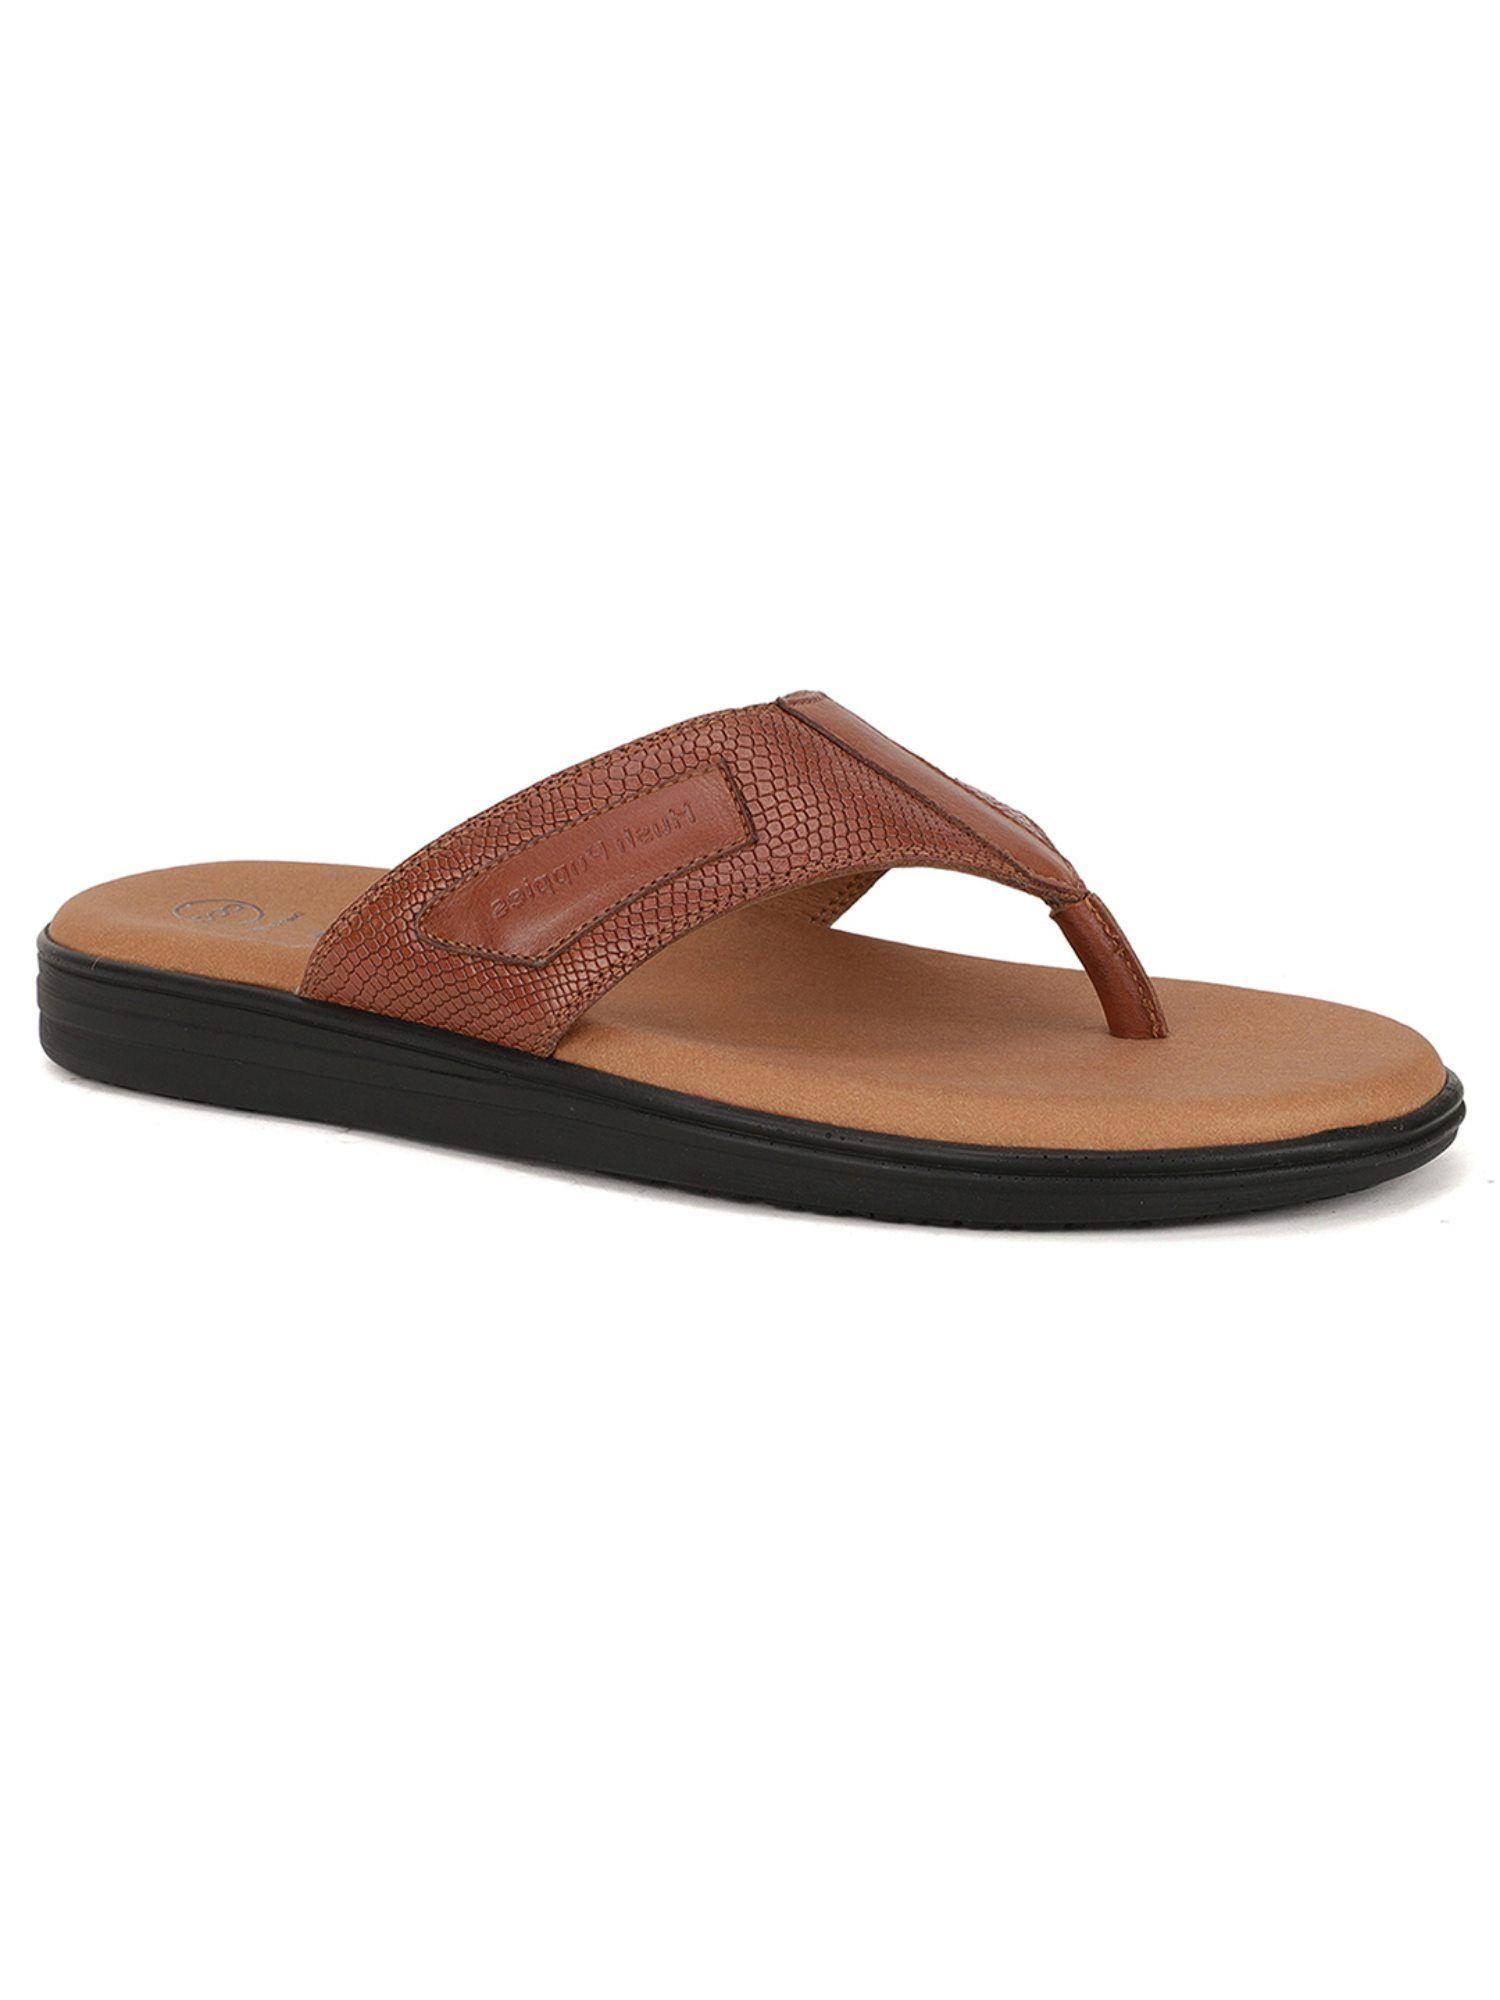 textured-brown-sandals